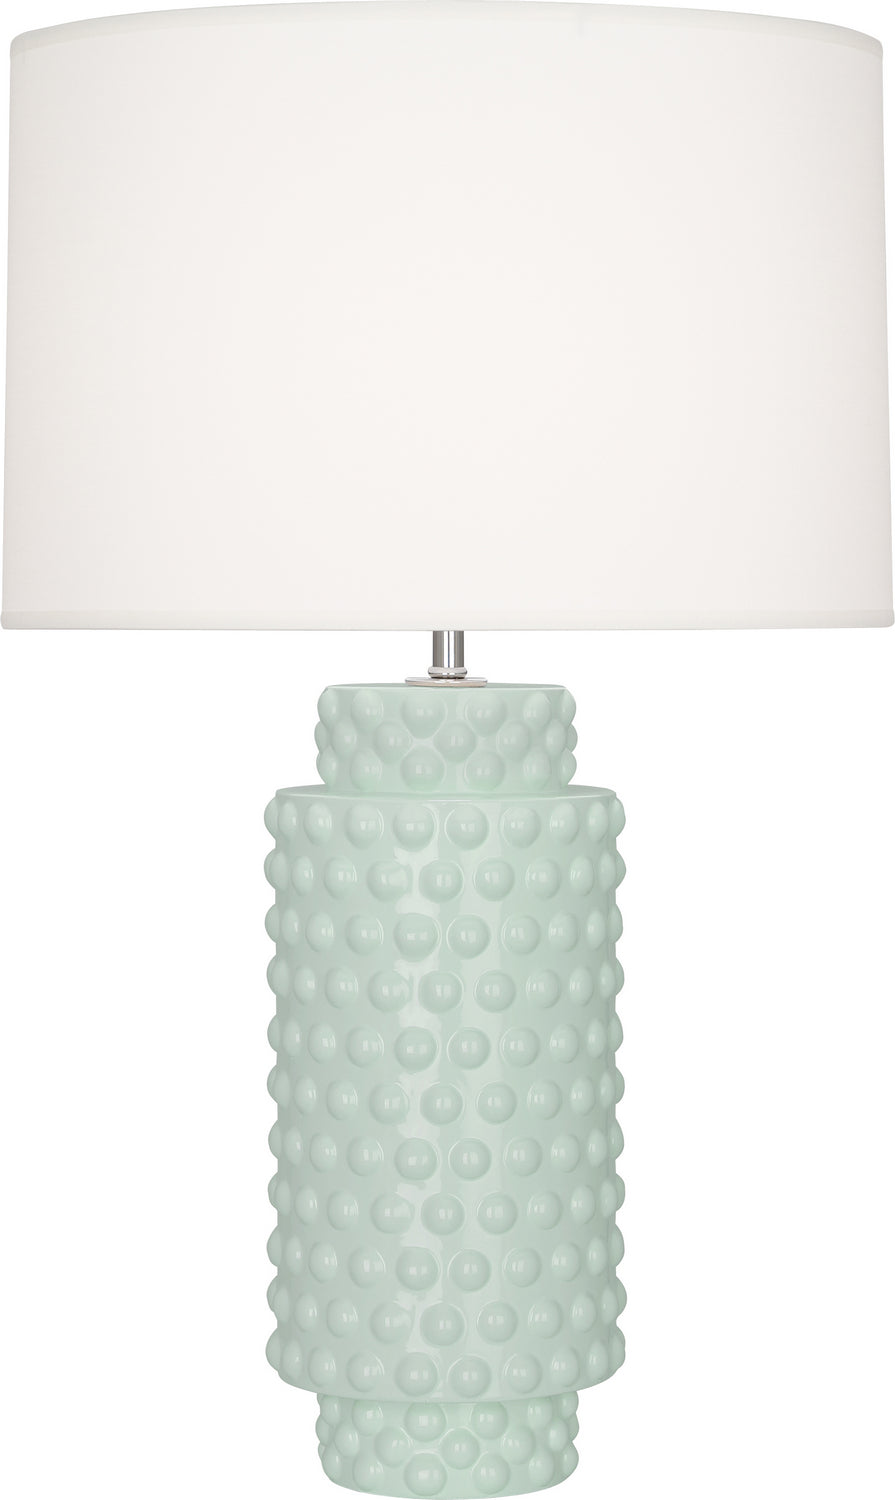 Robert Abbey - One Light Table Lamp - Dolly - Celadon Glazed Textured Ceramic- Union Lighting Luminaires Decor